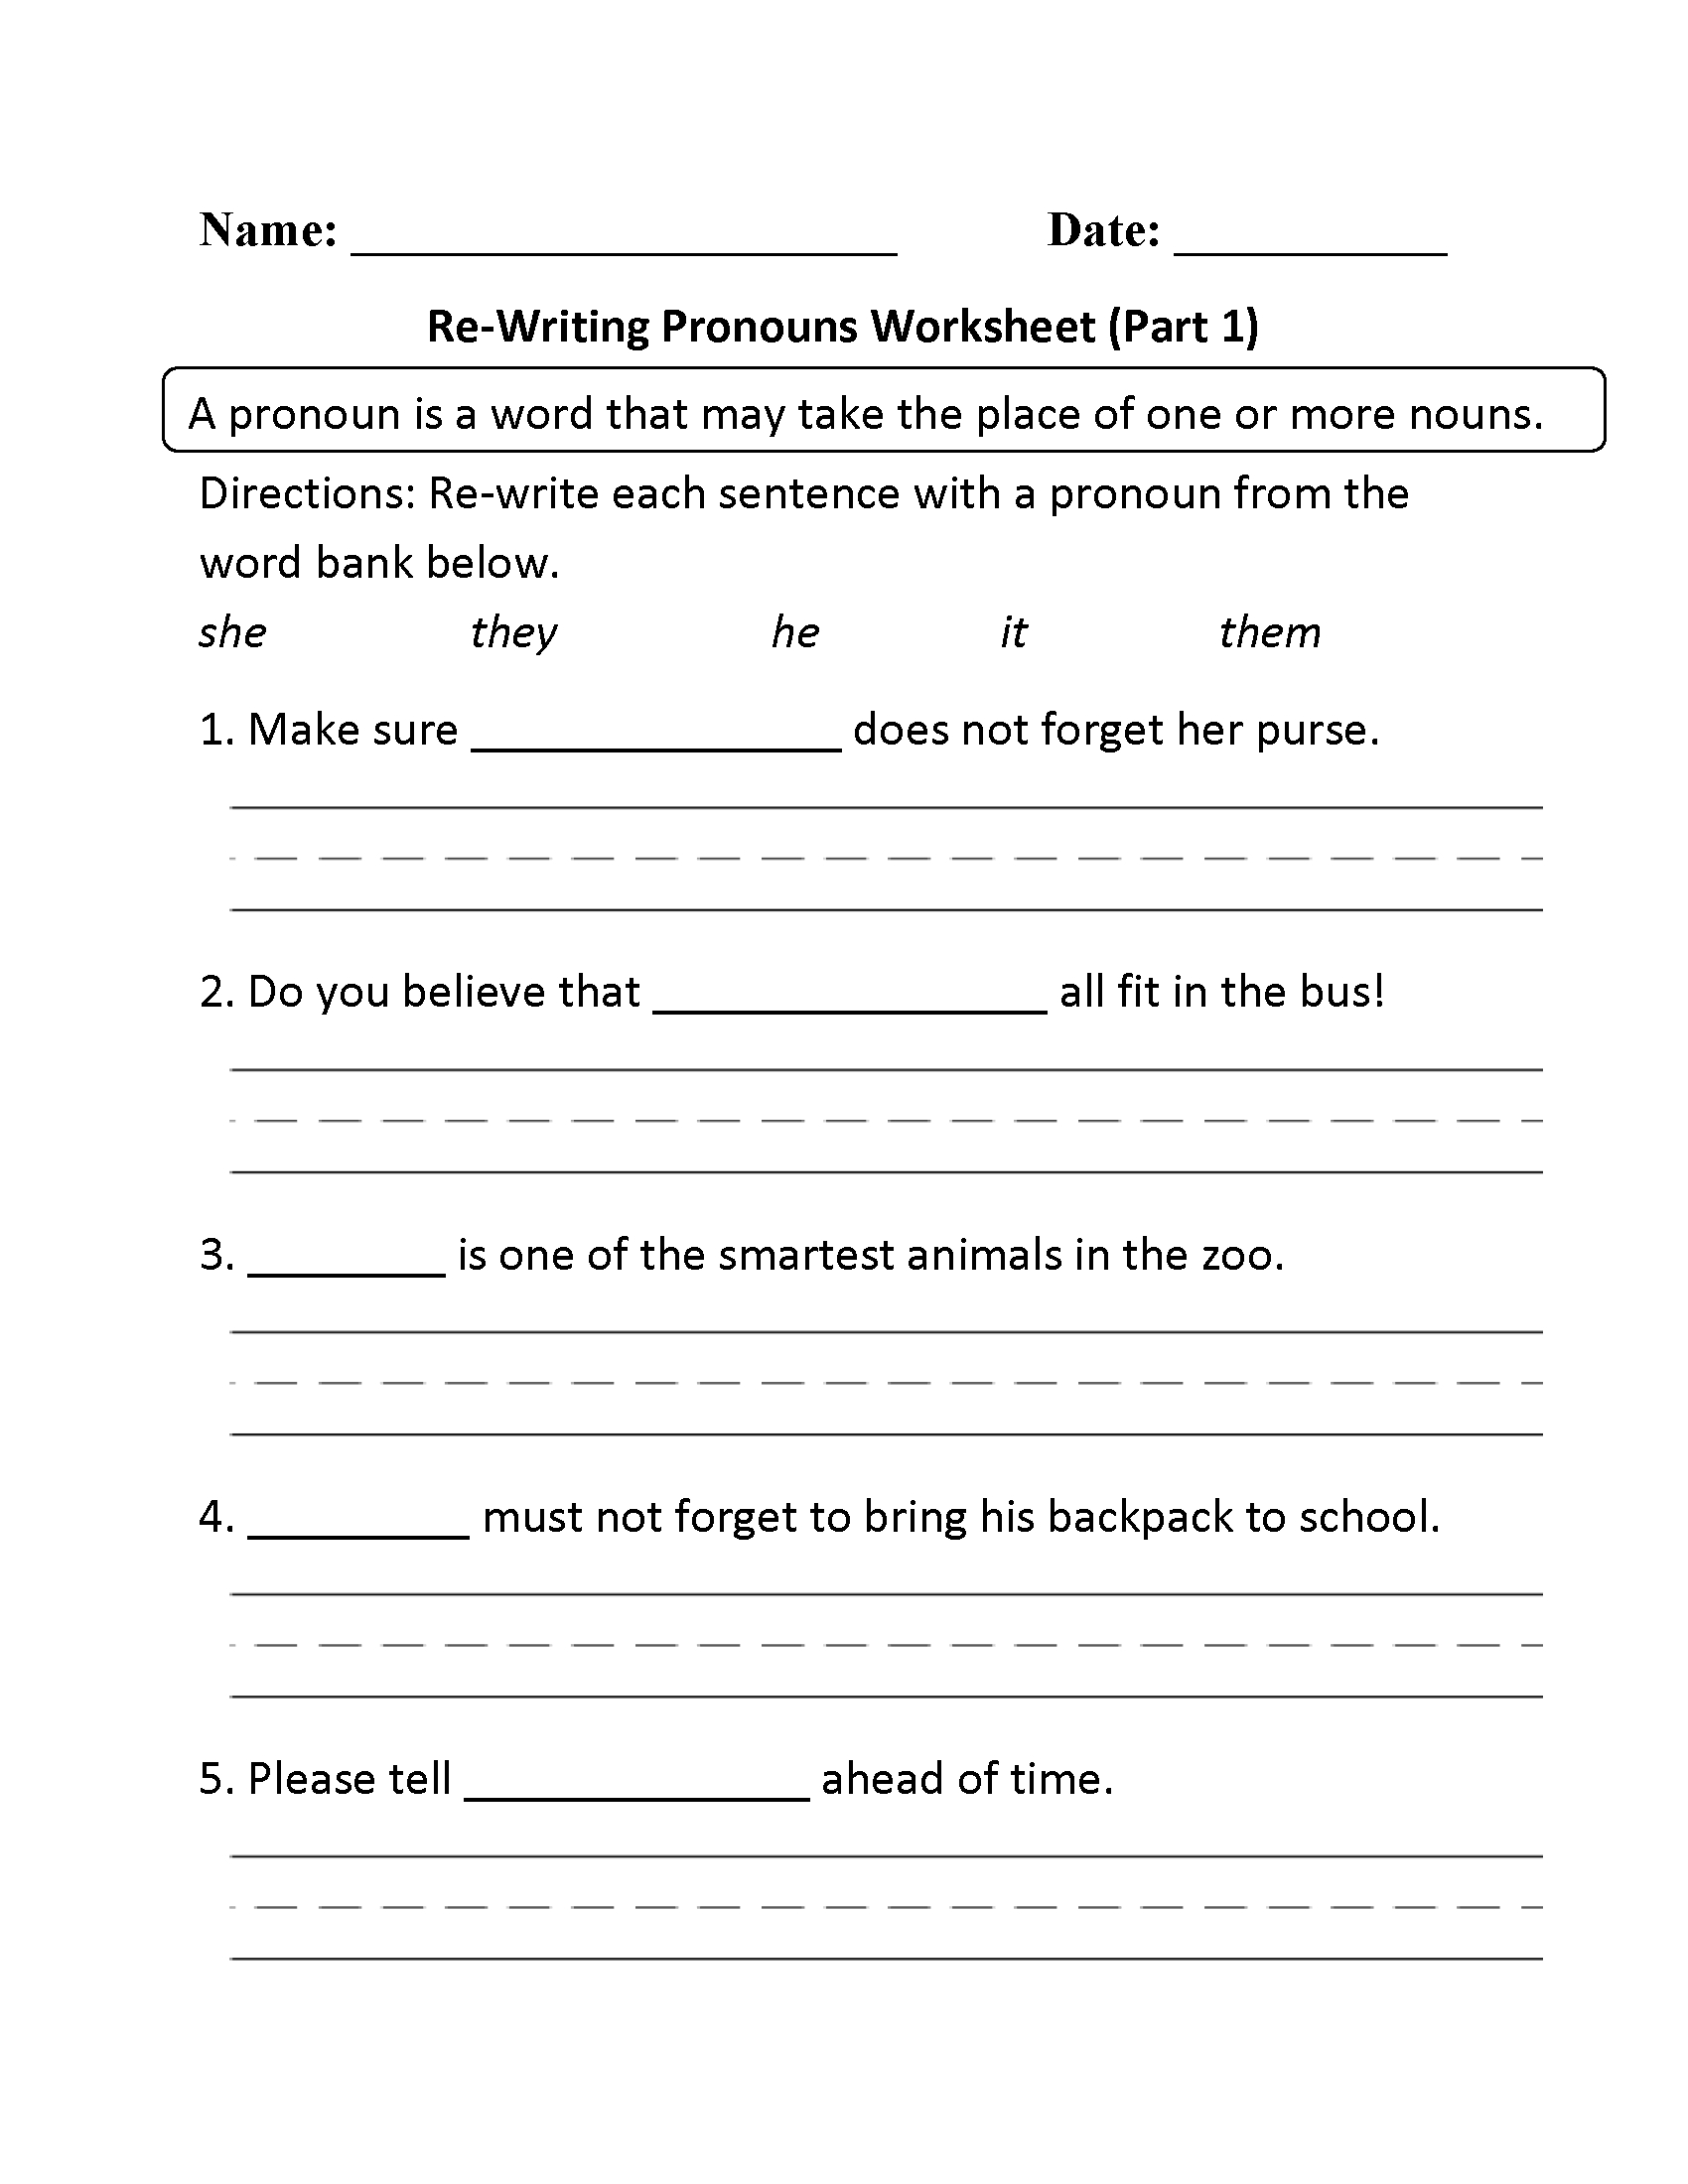 Pronouns Worksheets Regular Pronouns Worksheets Db excel